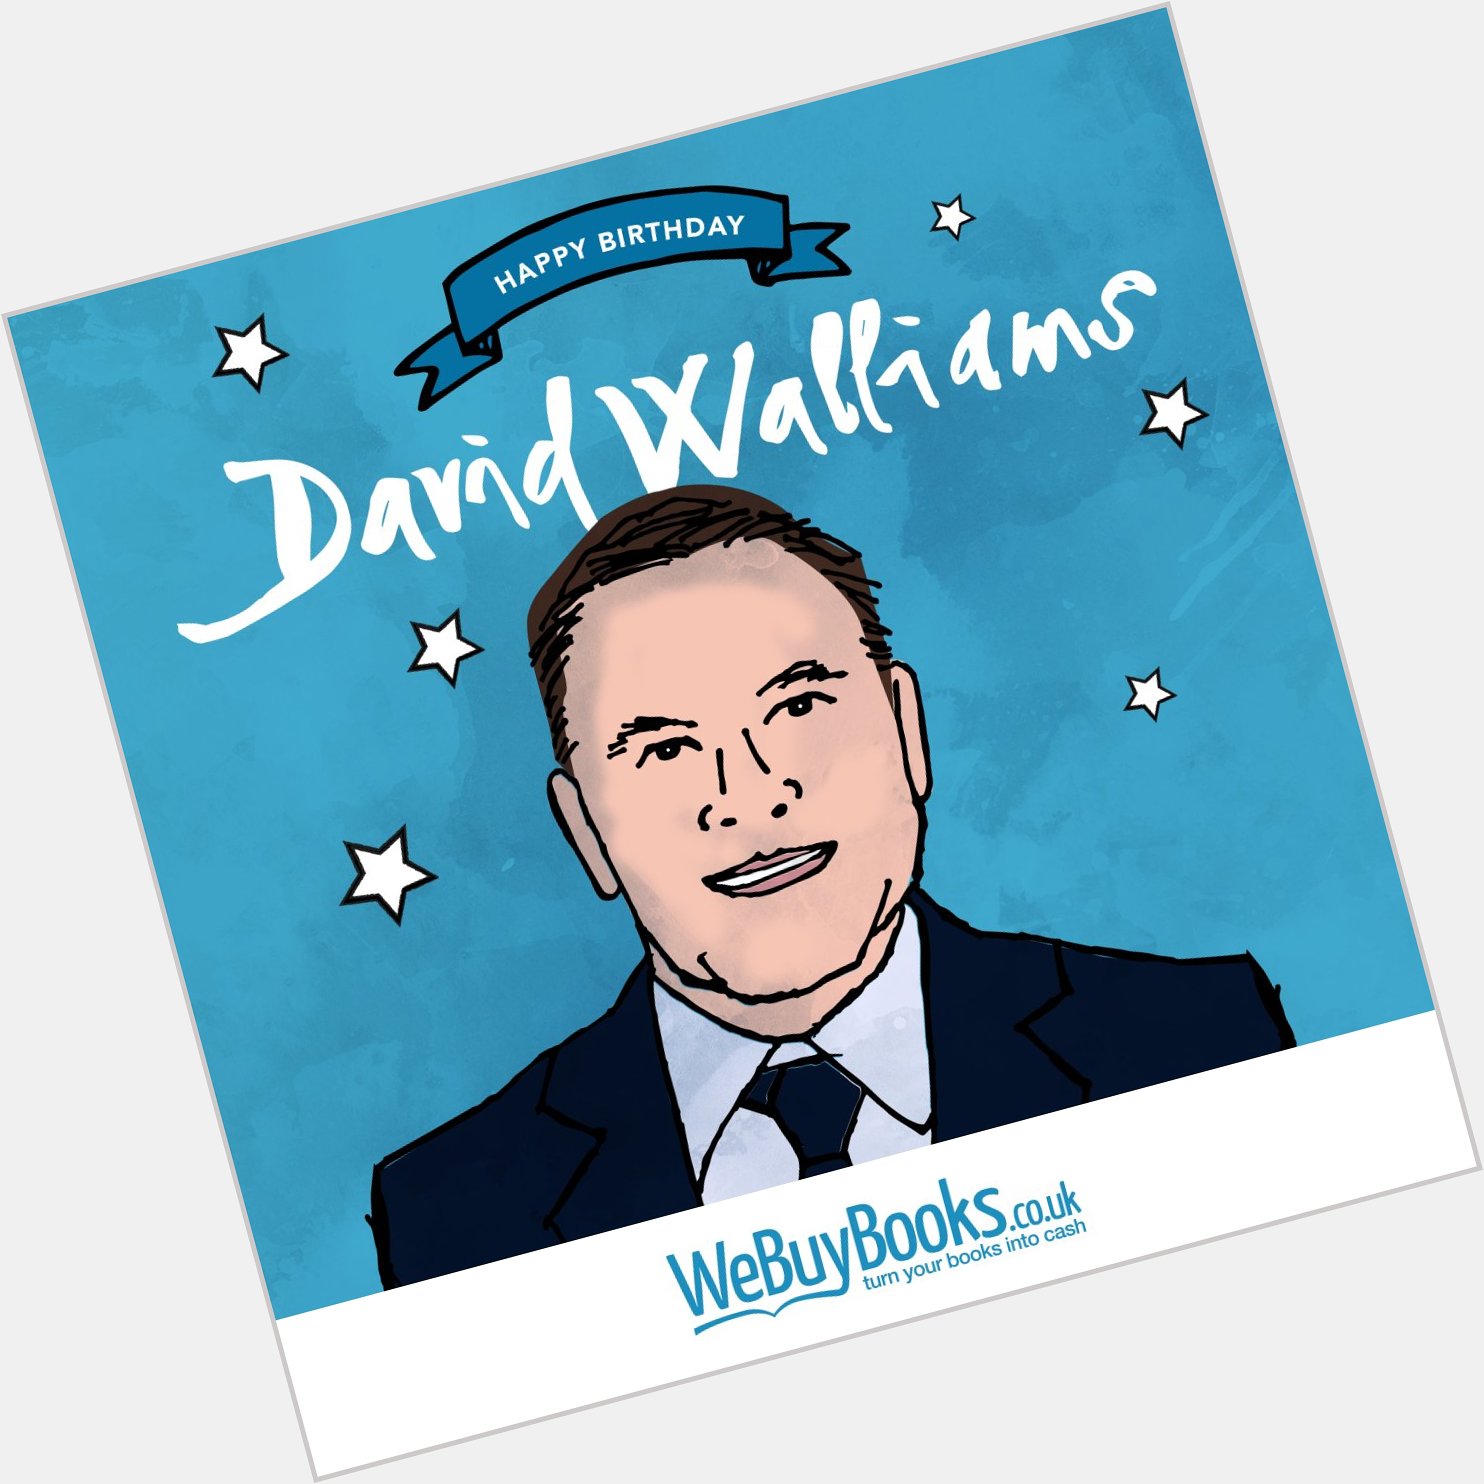 Happy Birthday David Walliams!  